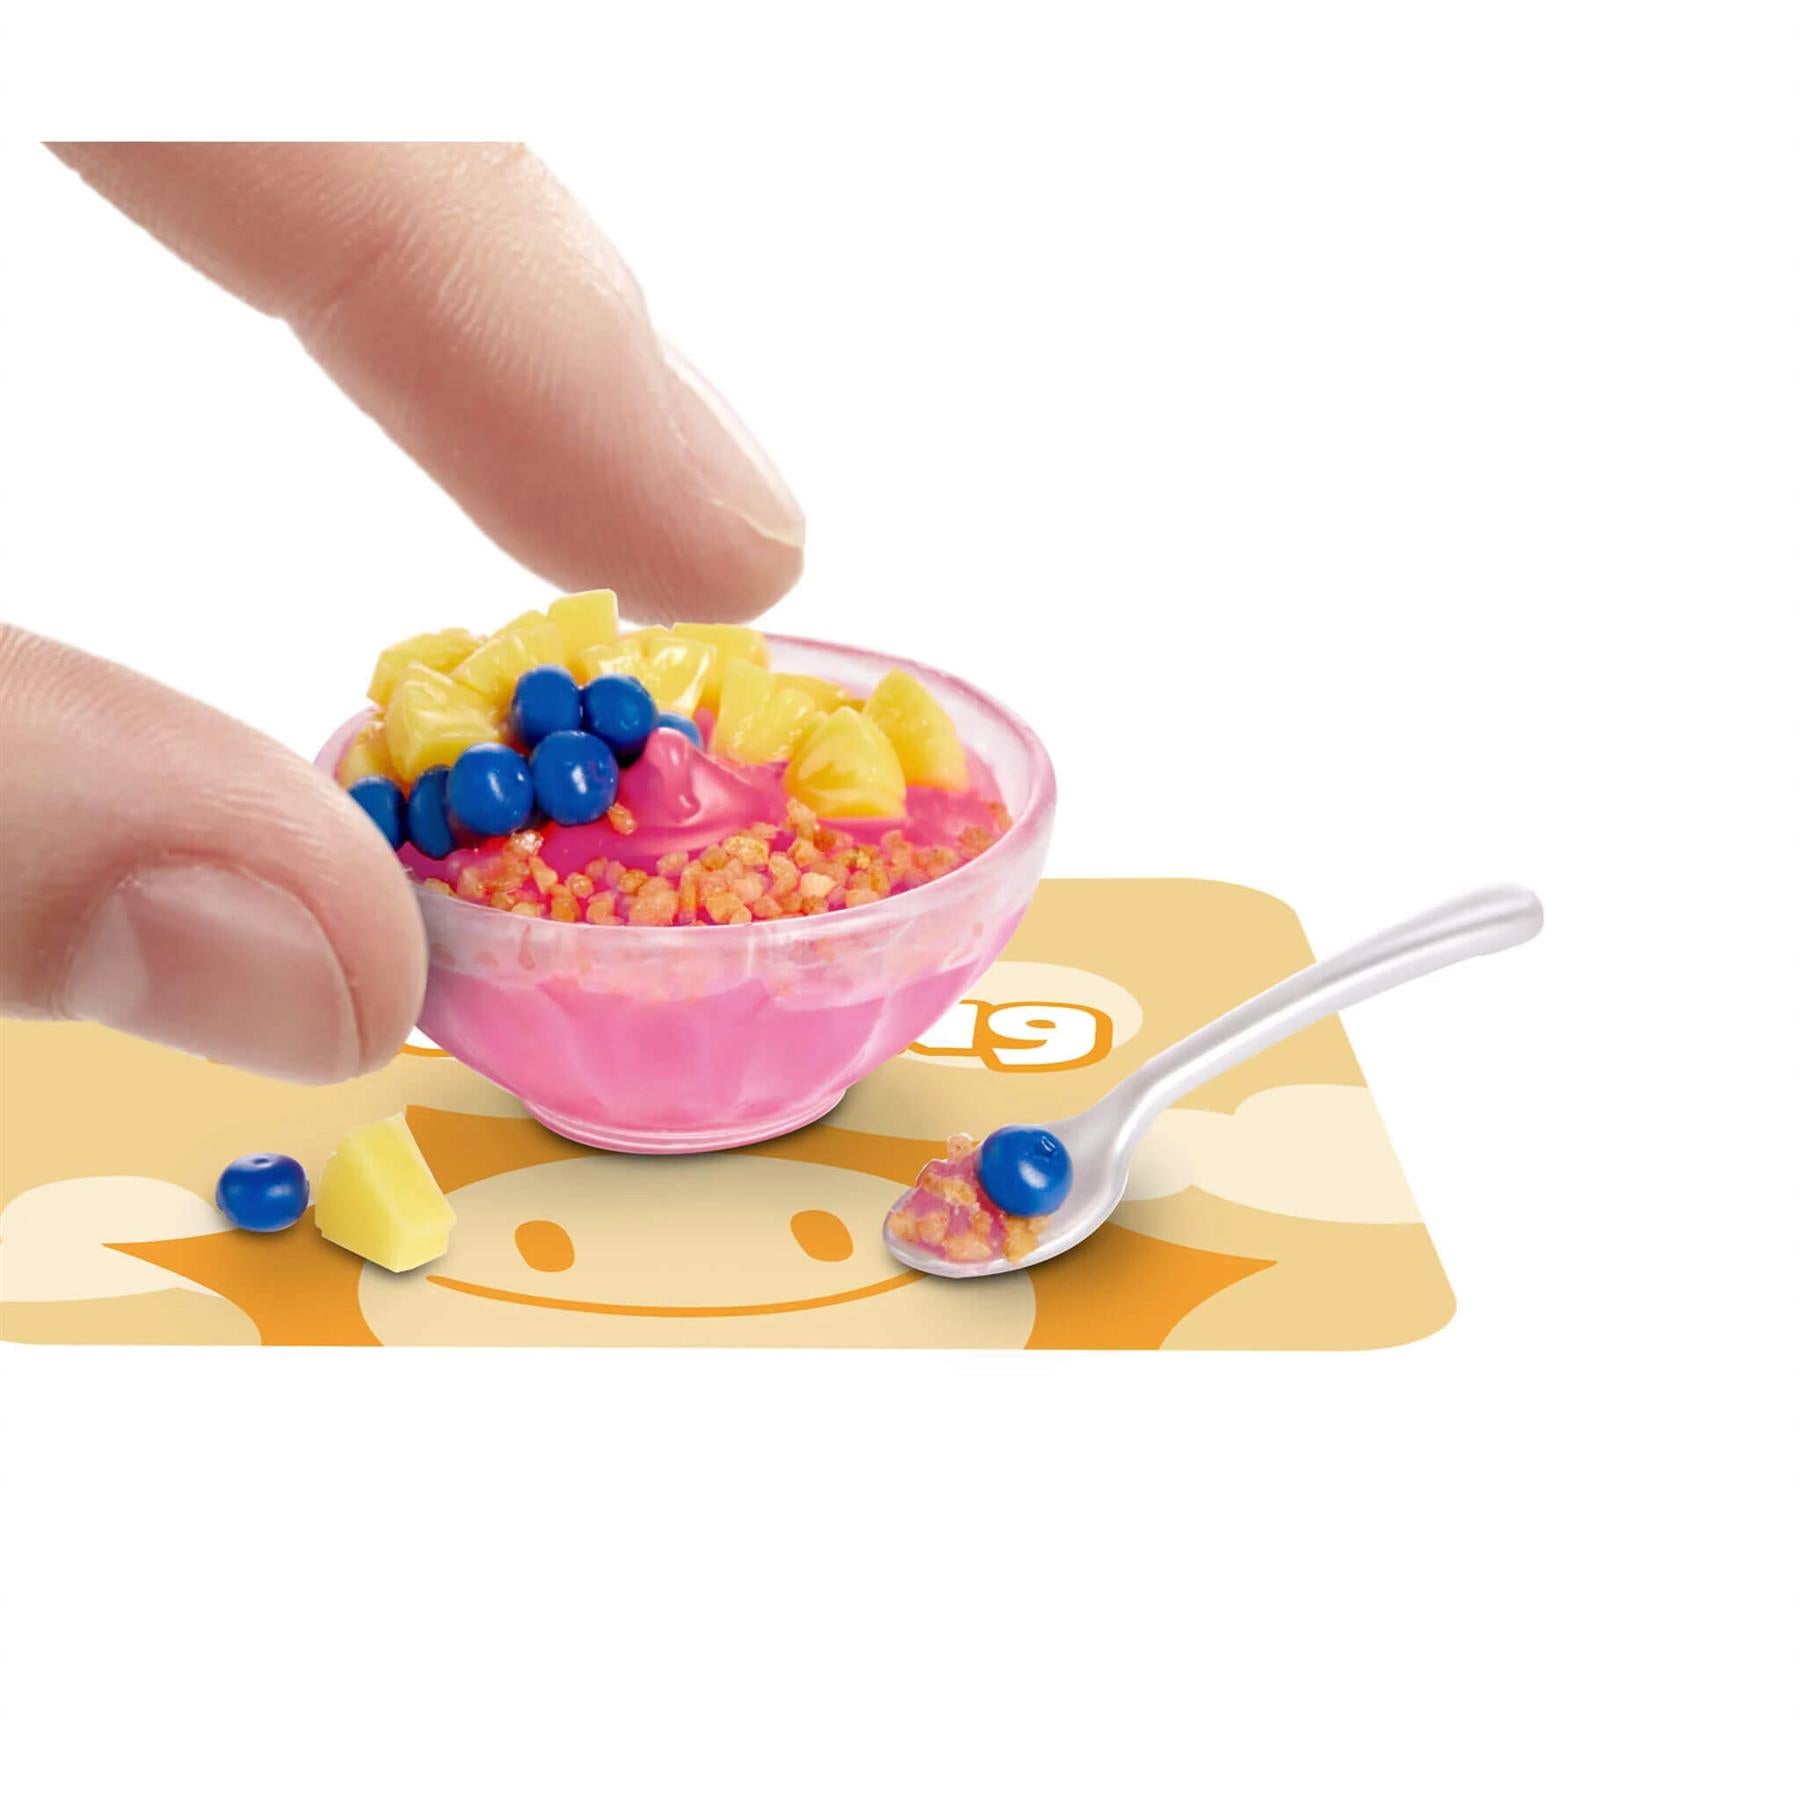 MGAs Miniverse Make It Mini Food Cafe Series 3 Mini Collectibles